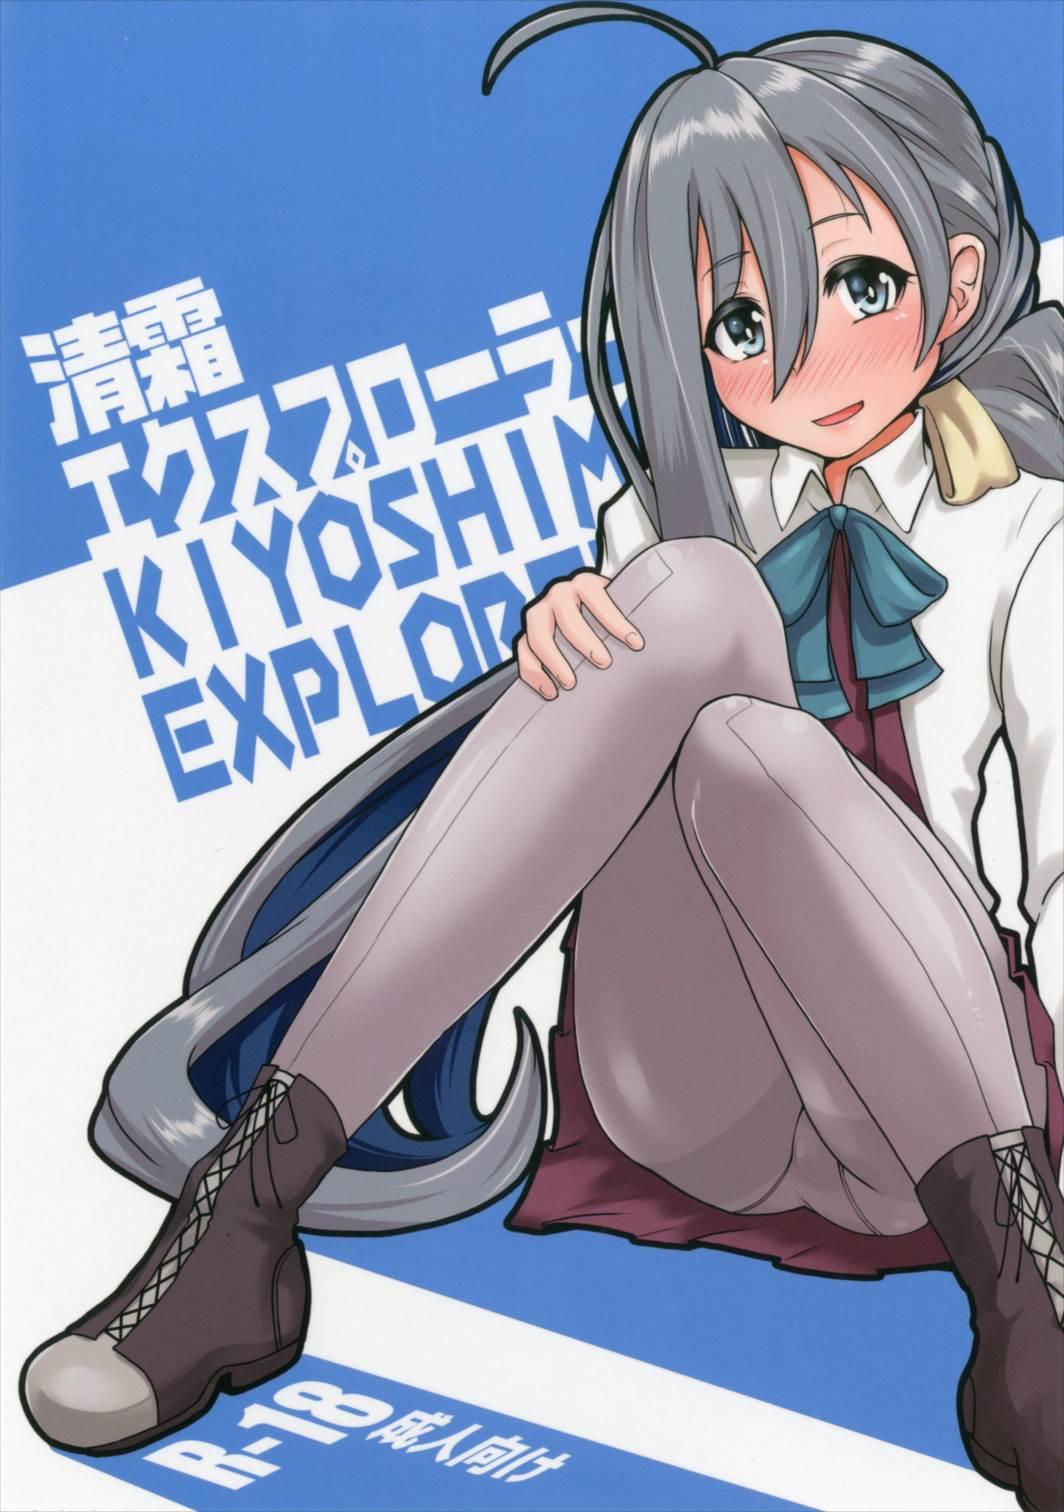 Kiyoshimo Explorer 0